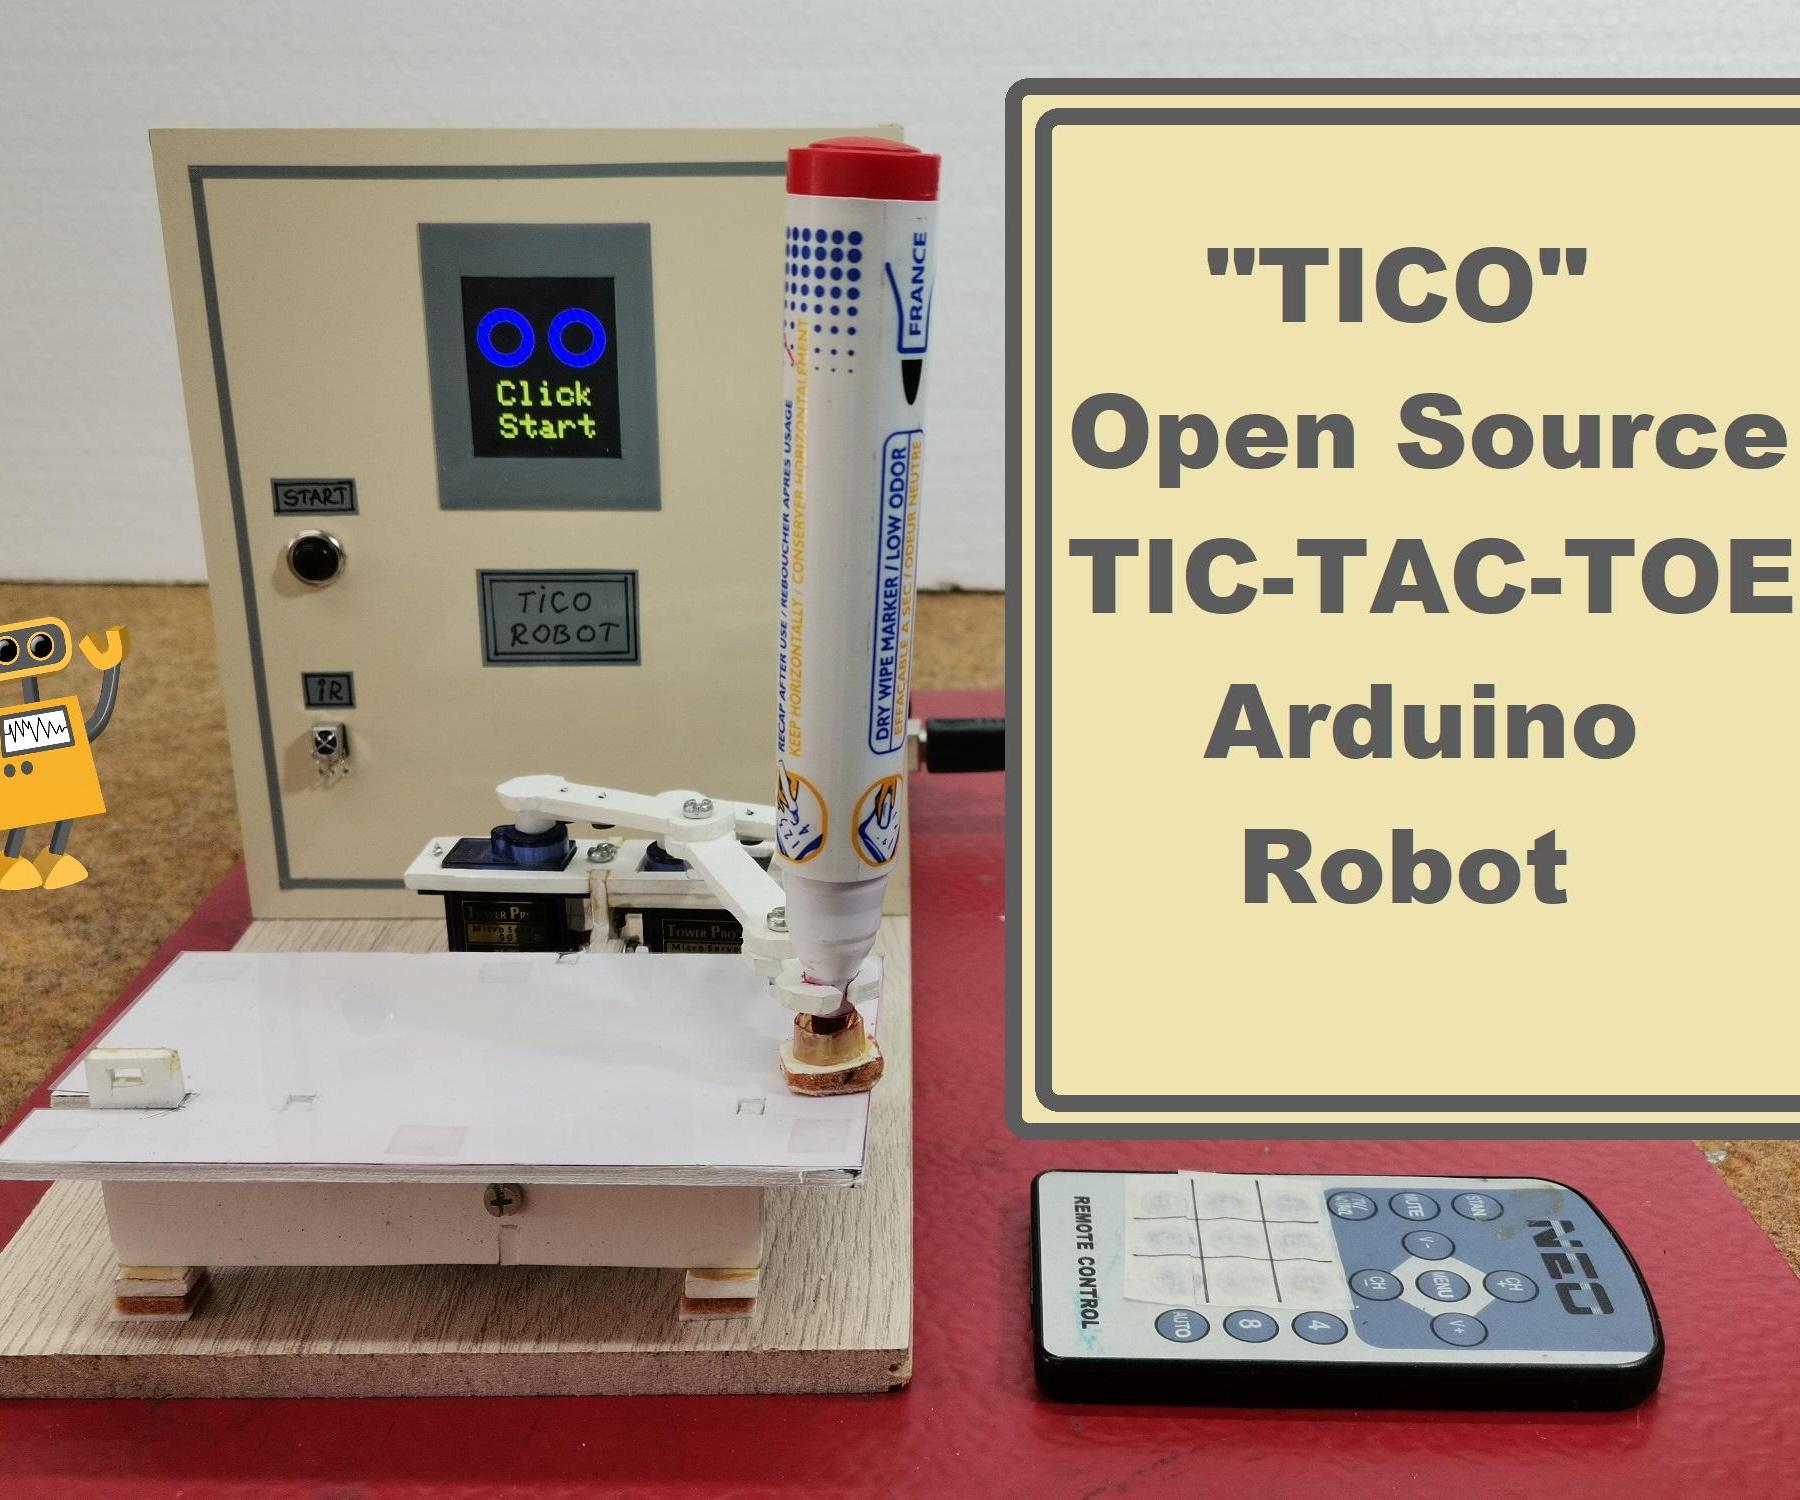 TICO Open Source Tic-Tac-Toe Arduino Robot